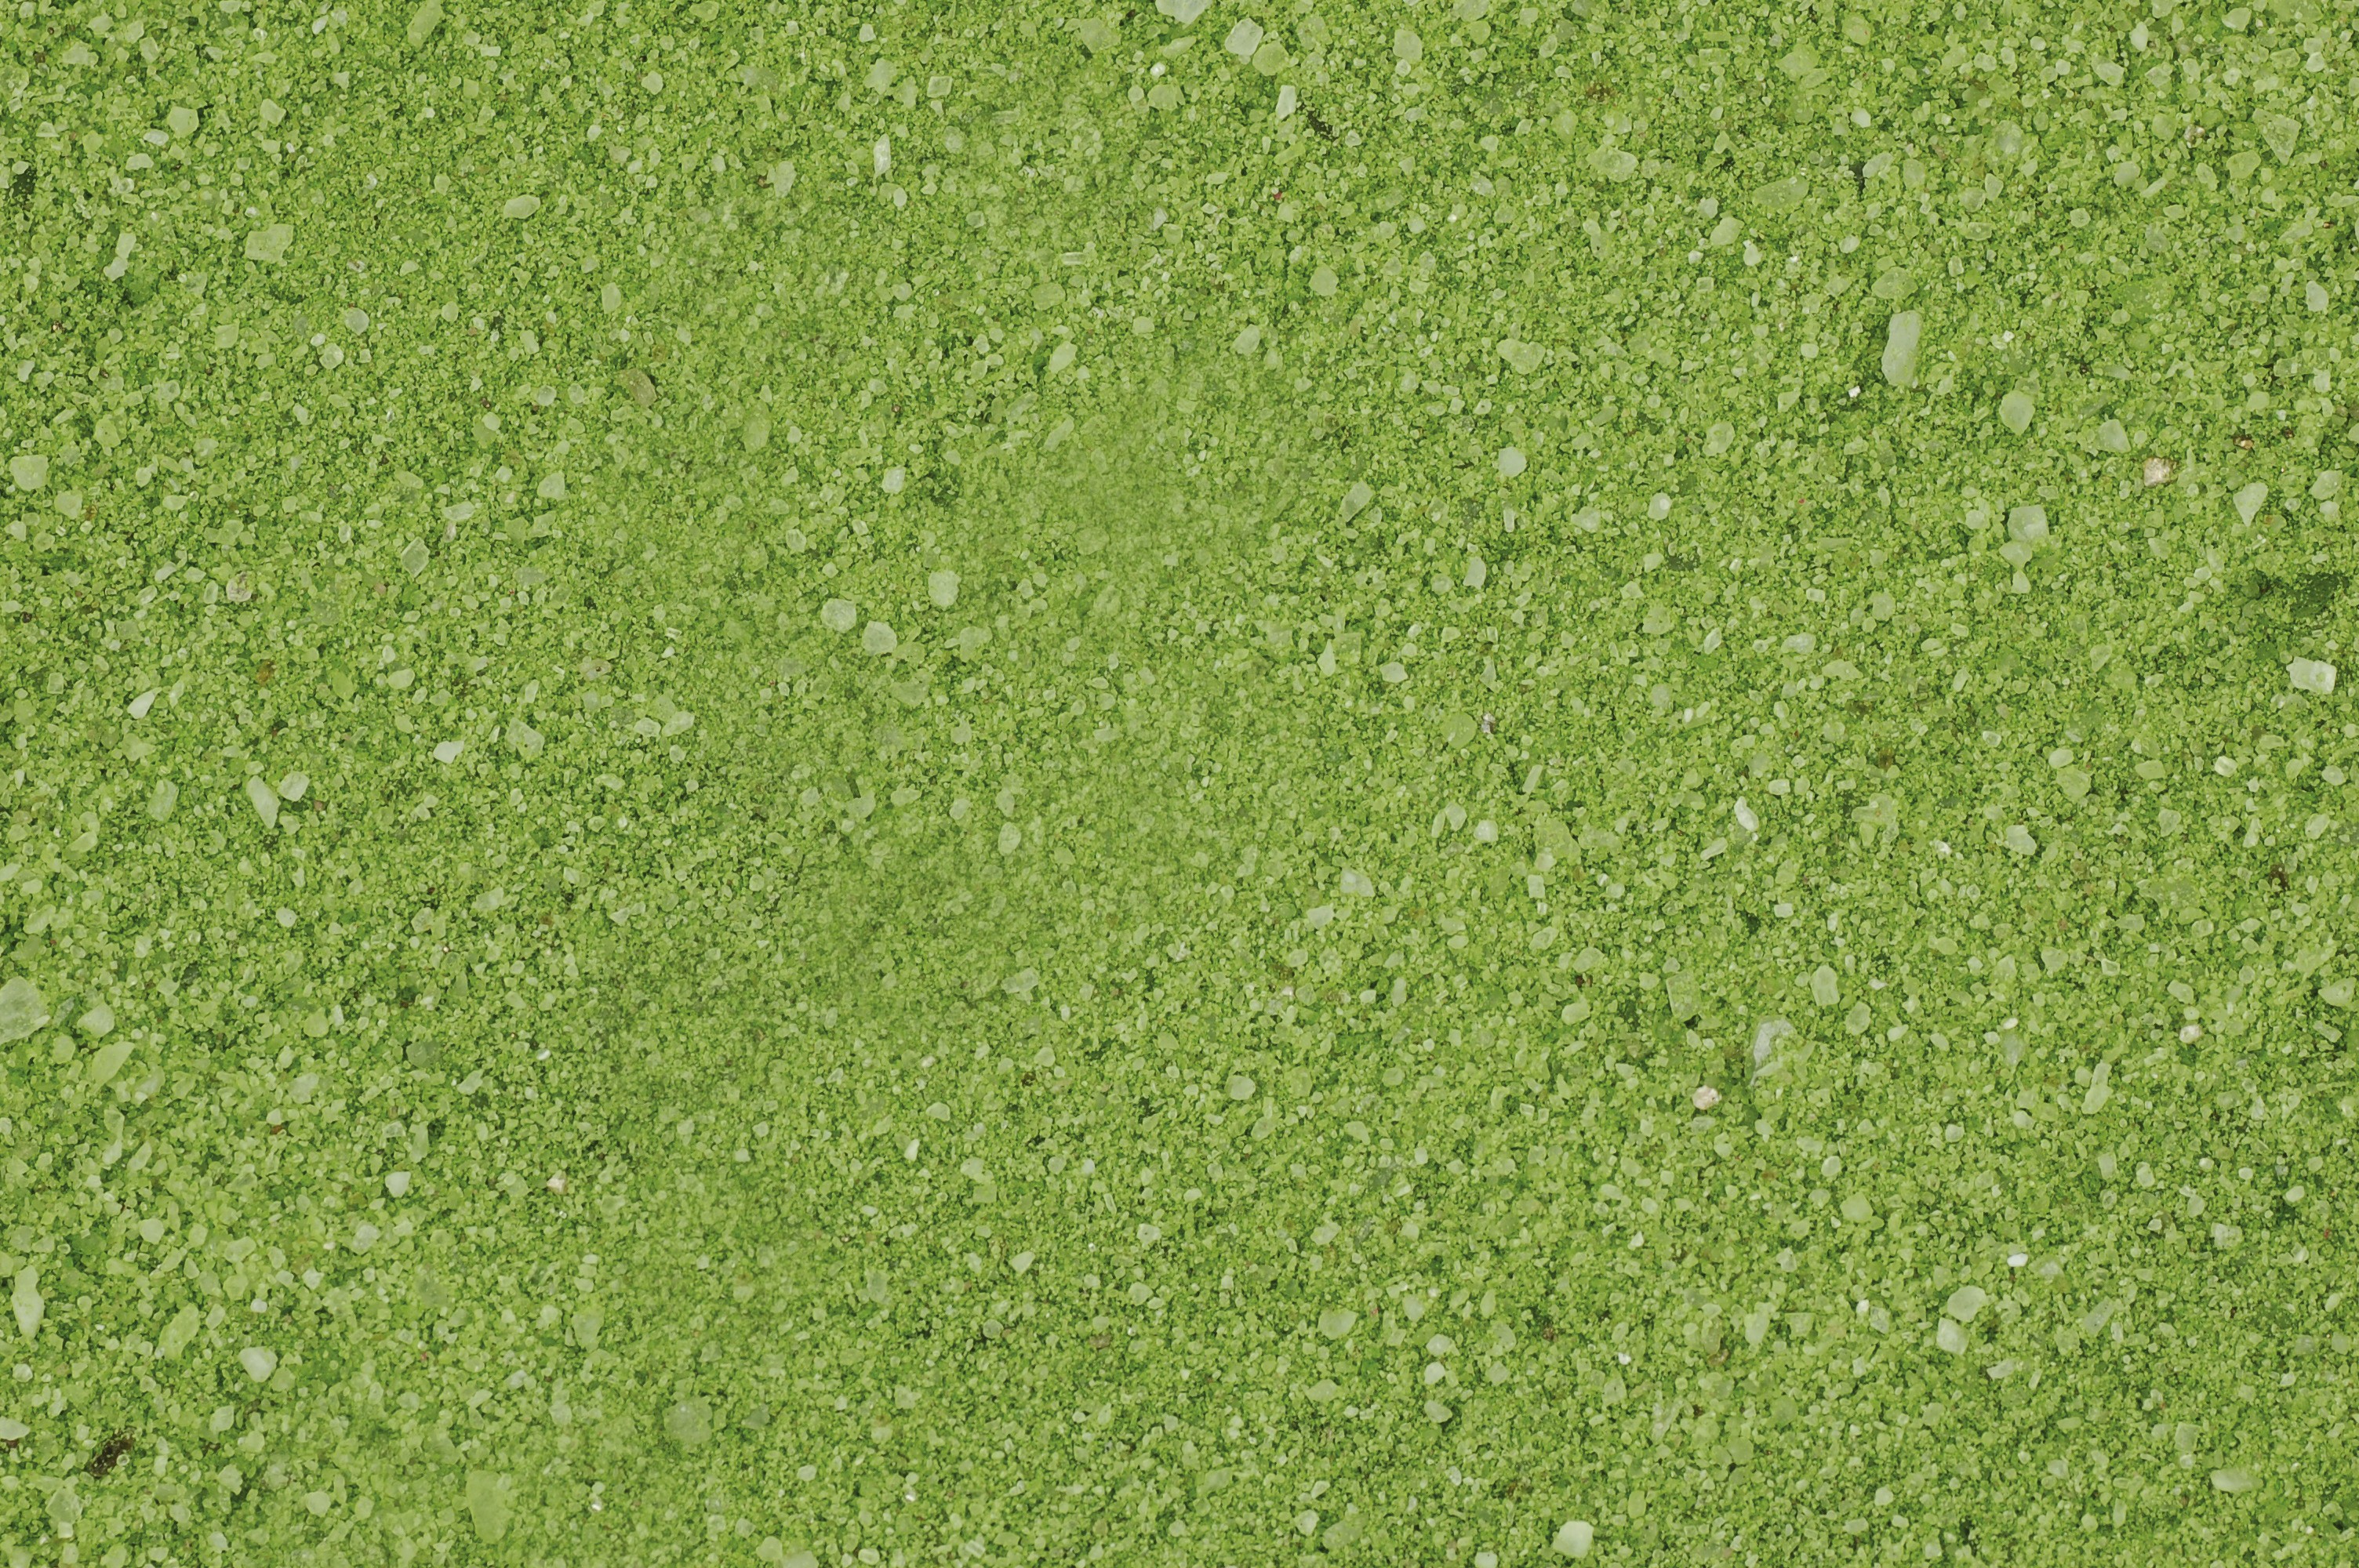 Komodo CaCo Sand Green 4Kg U46078